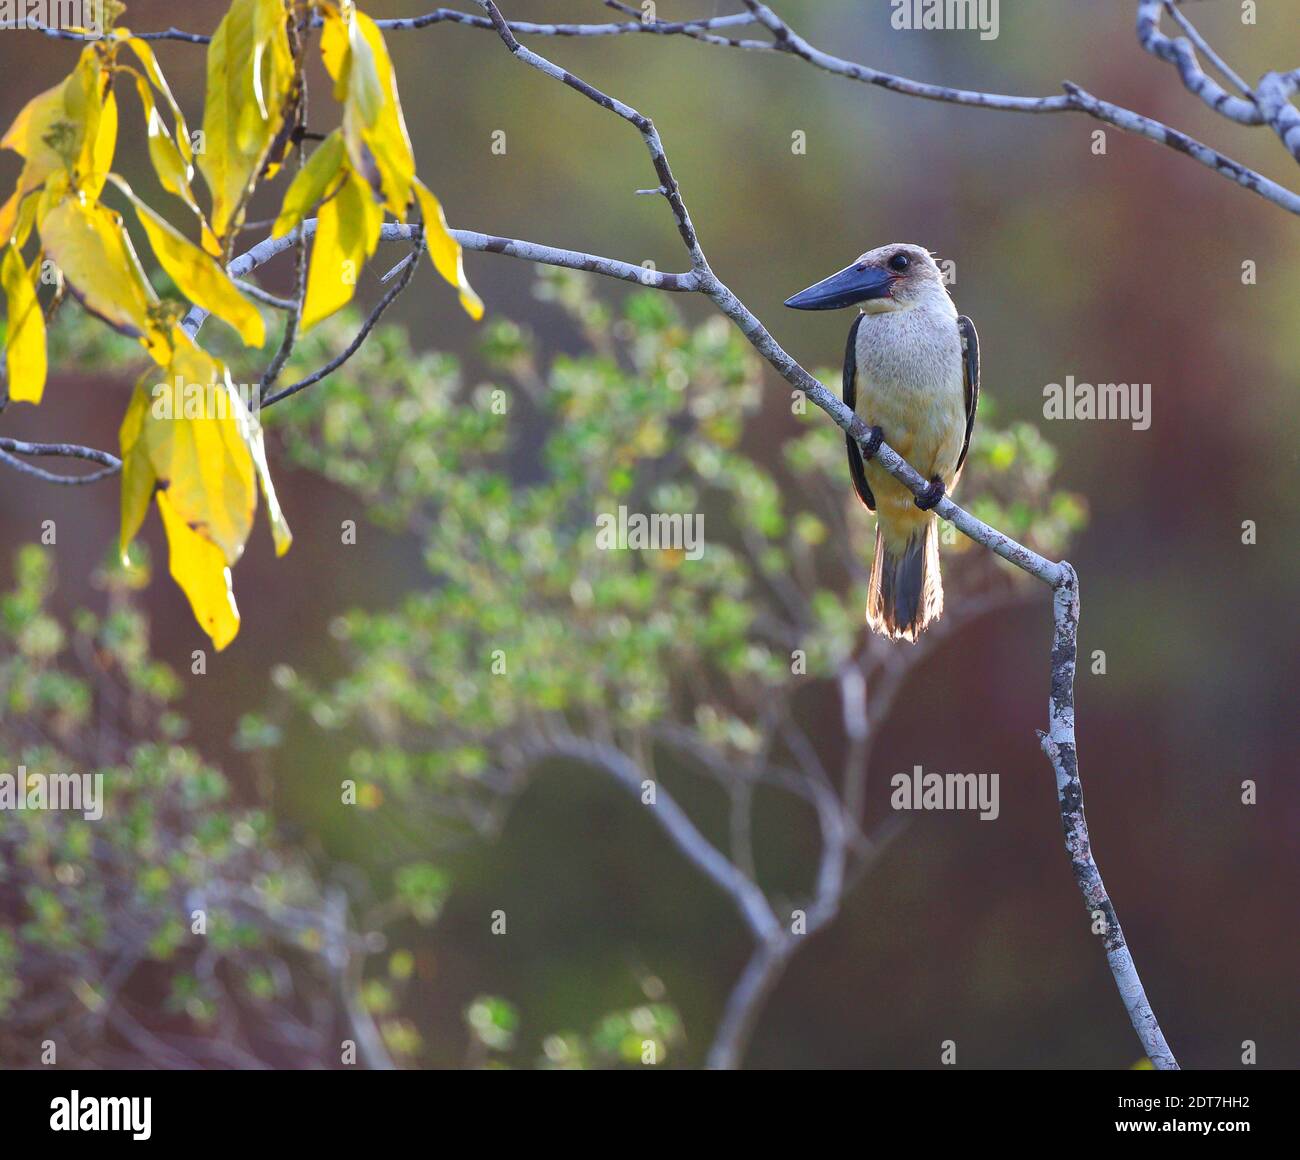 Great-billed kingfisher, Black-billed kingfisher  (Pelargopsis melanorhyncha, Pelargopsis melanorhyncha melanorhyncha), perching on a branch, Stock Photo